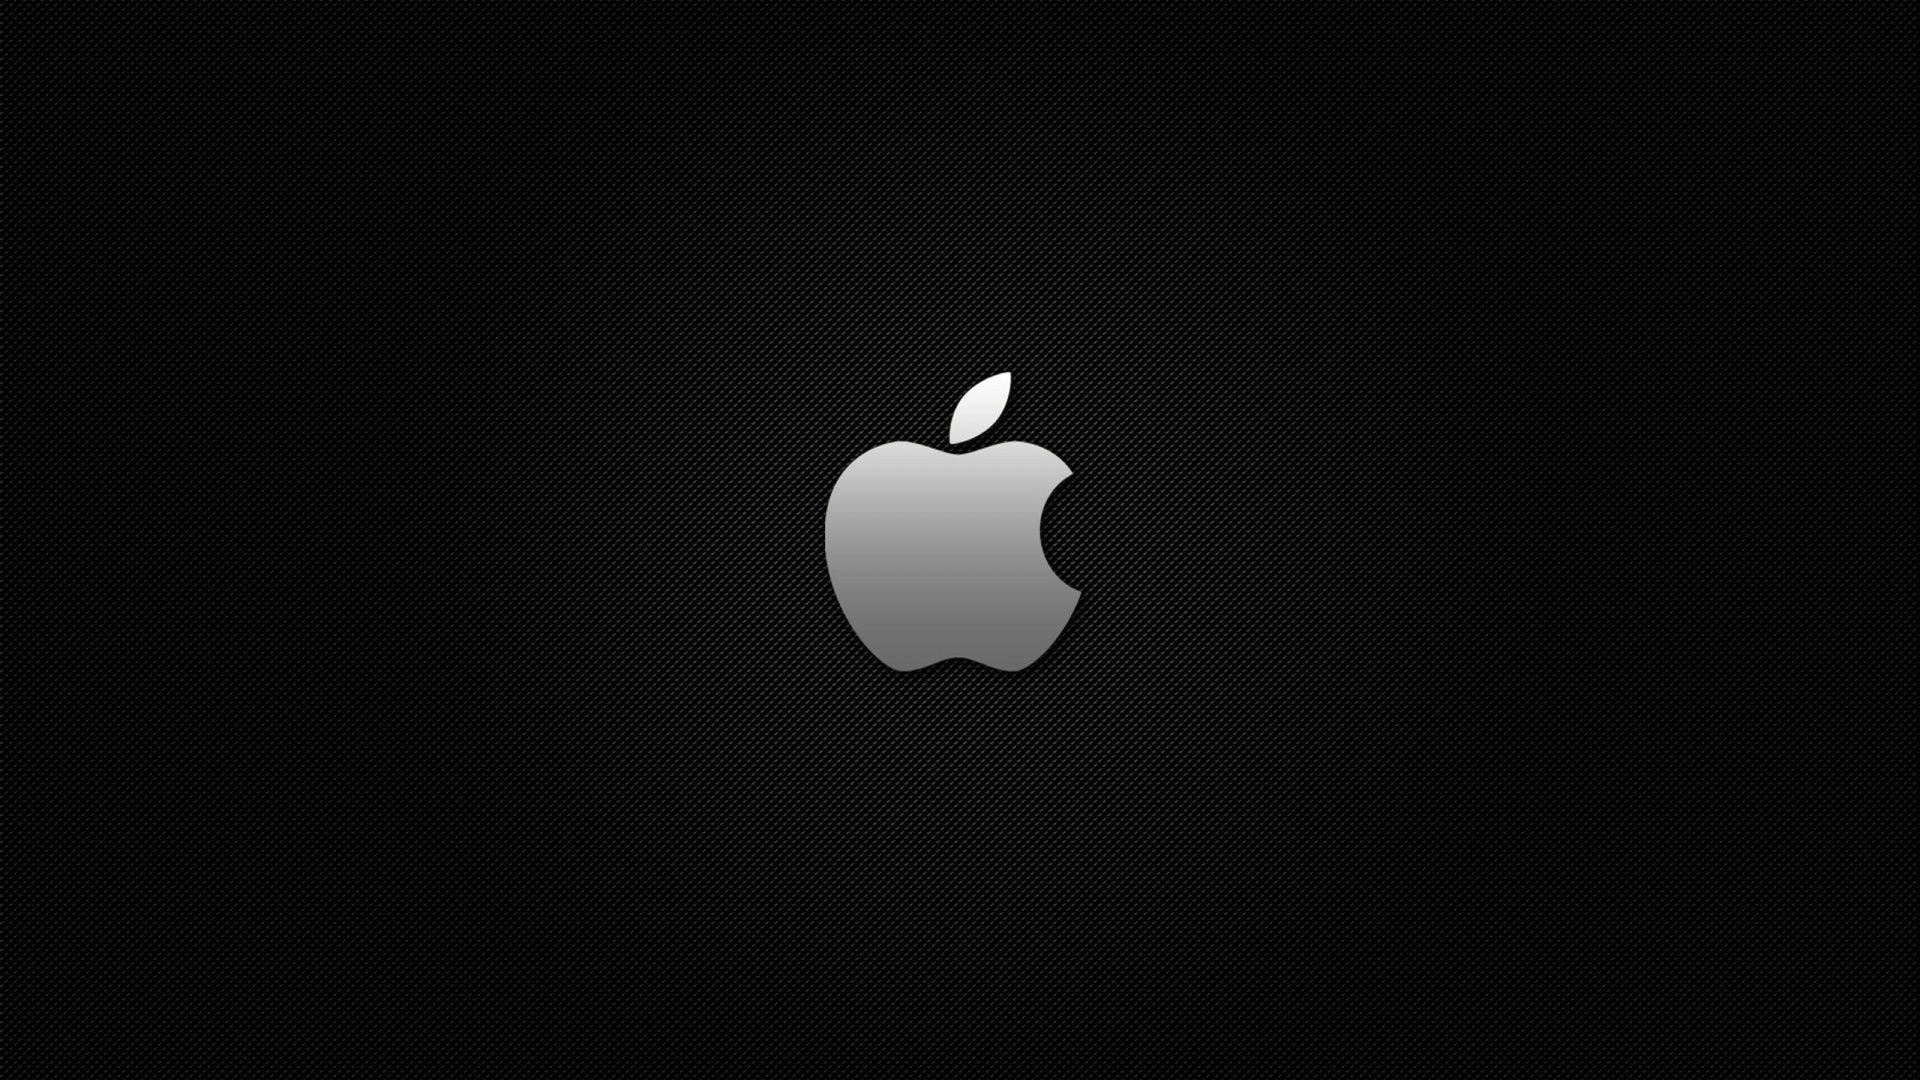 5 Black Logo - Black Apple Logo Wallpaper HD Wallpaper. Apple logo